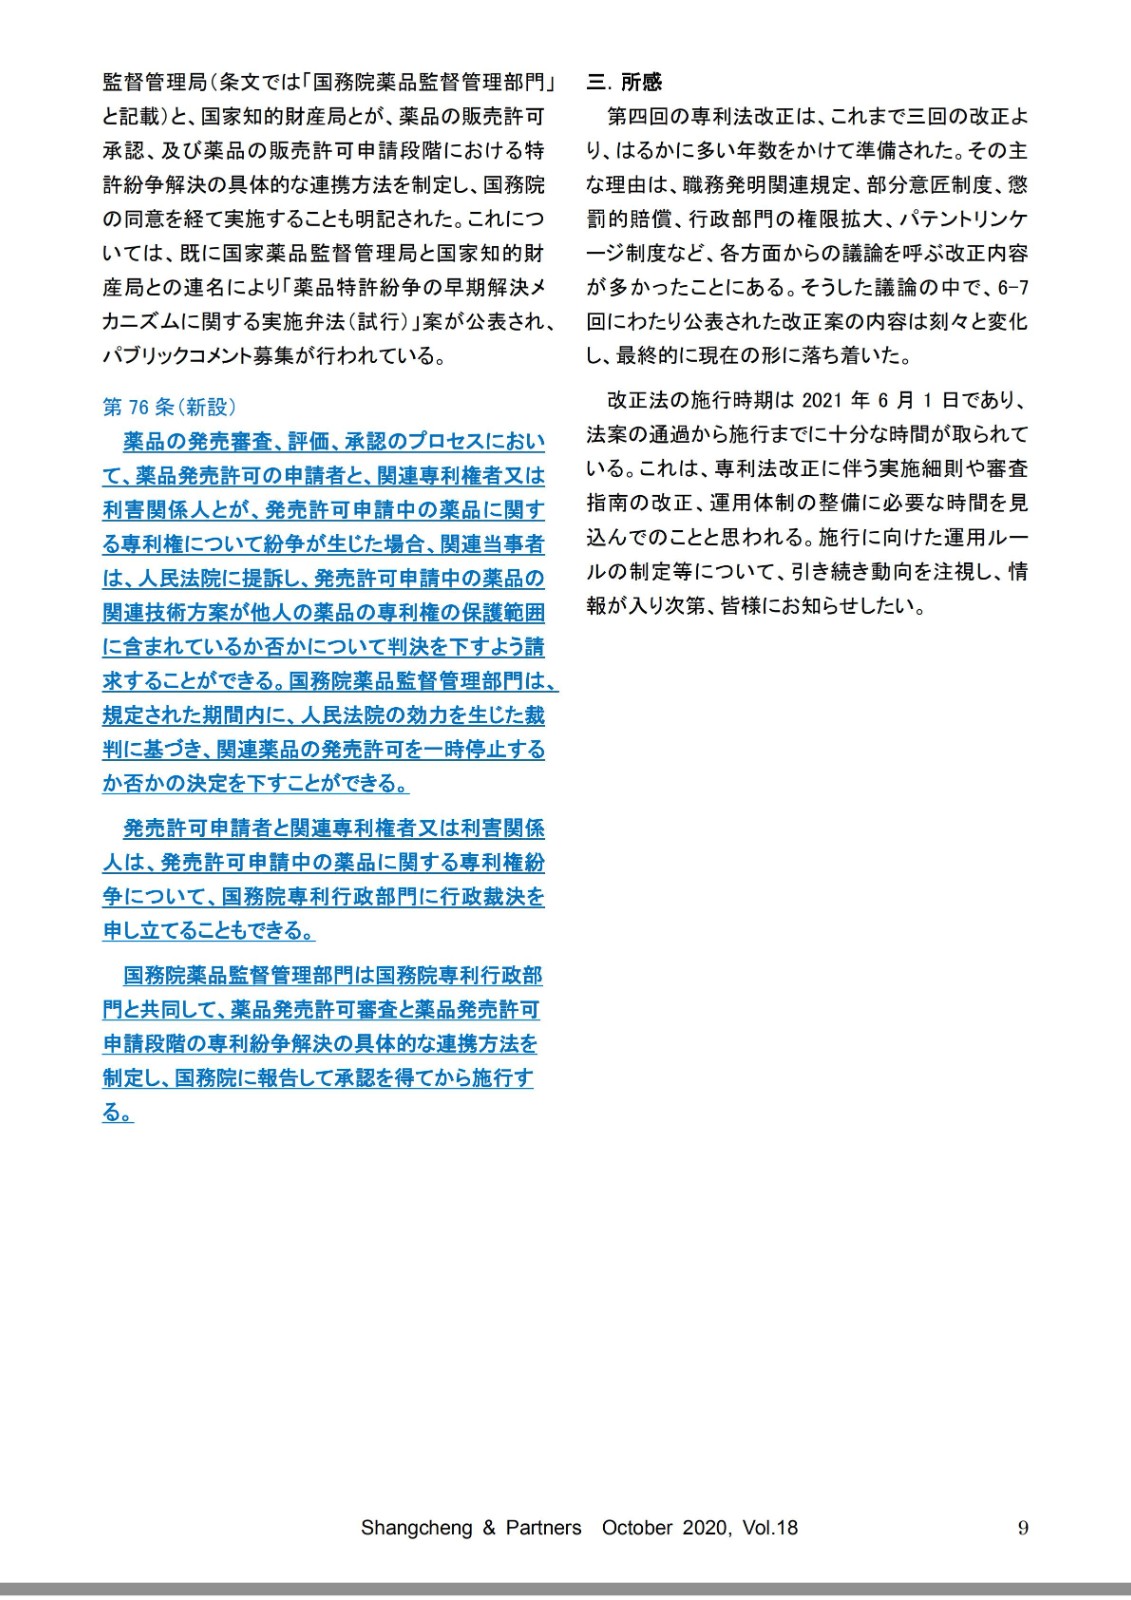 Shangcheng Newsletter専利法改正特集号　Vol.18(2020.10)_部分9_00.jpg